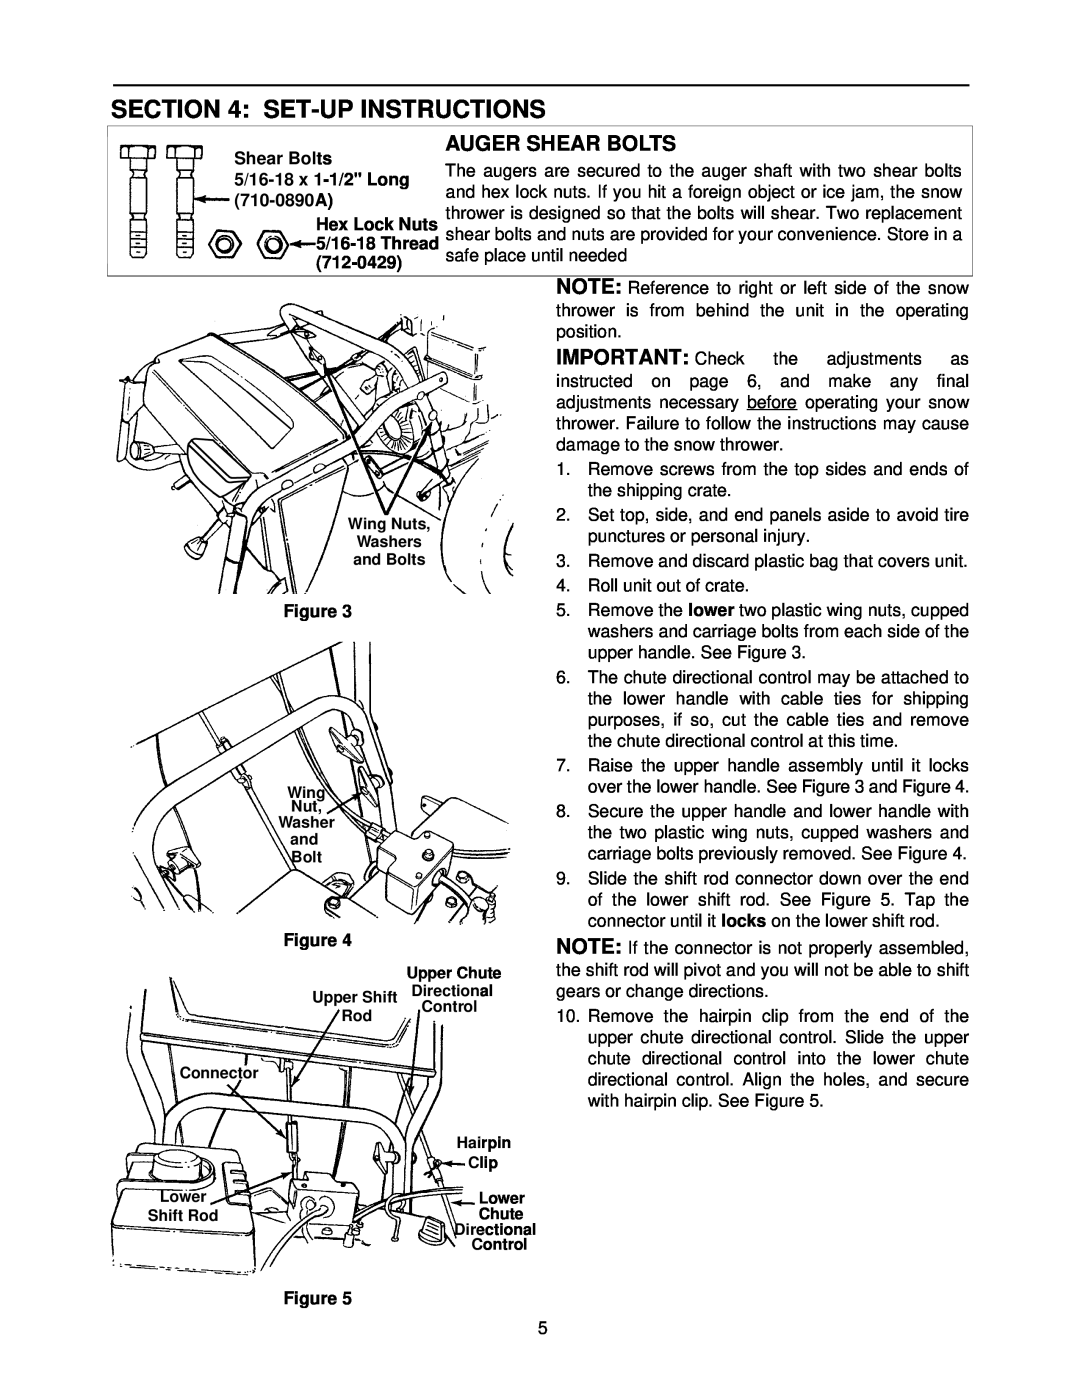 Cub Cadet 1333 SWE manual Set-Up Instructions, Auger Shear Bolts, 5/16-18 x 1-1/2 Long, 710-0890A, Hex Lock Nuts, 712-0429 